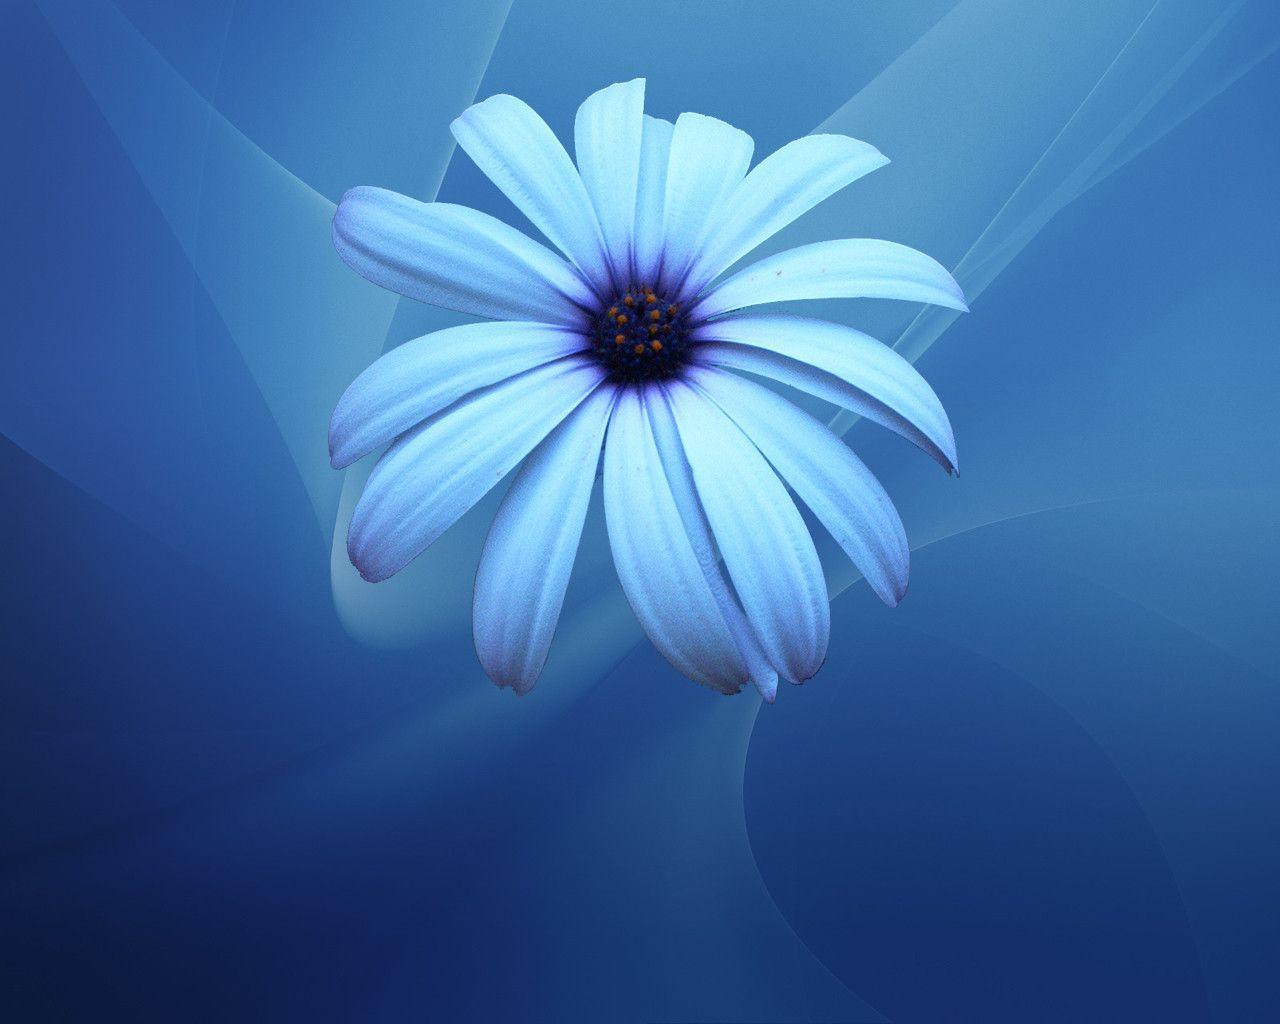 Blue Flower Wallpaper. Free Software. Free IDM Forever